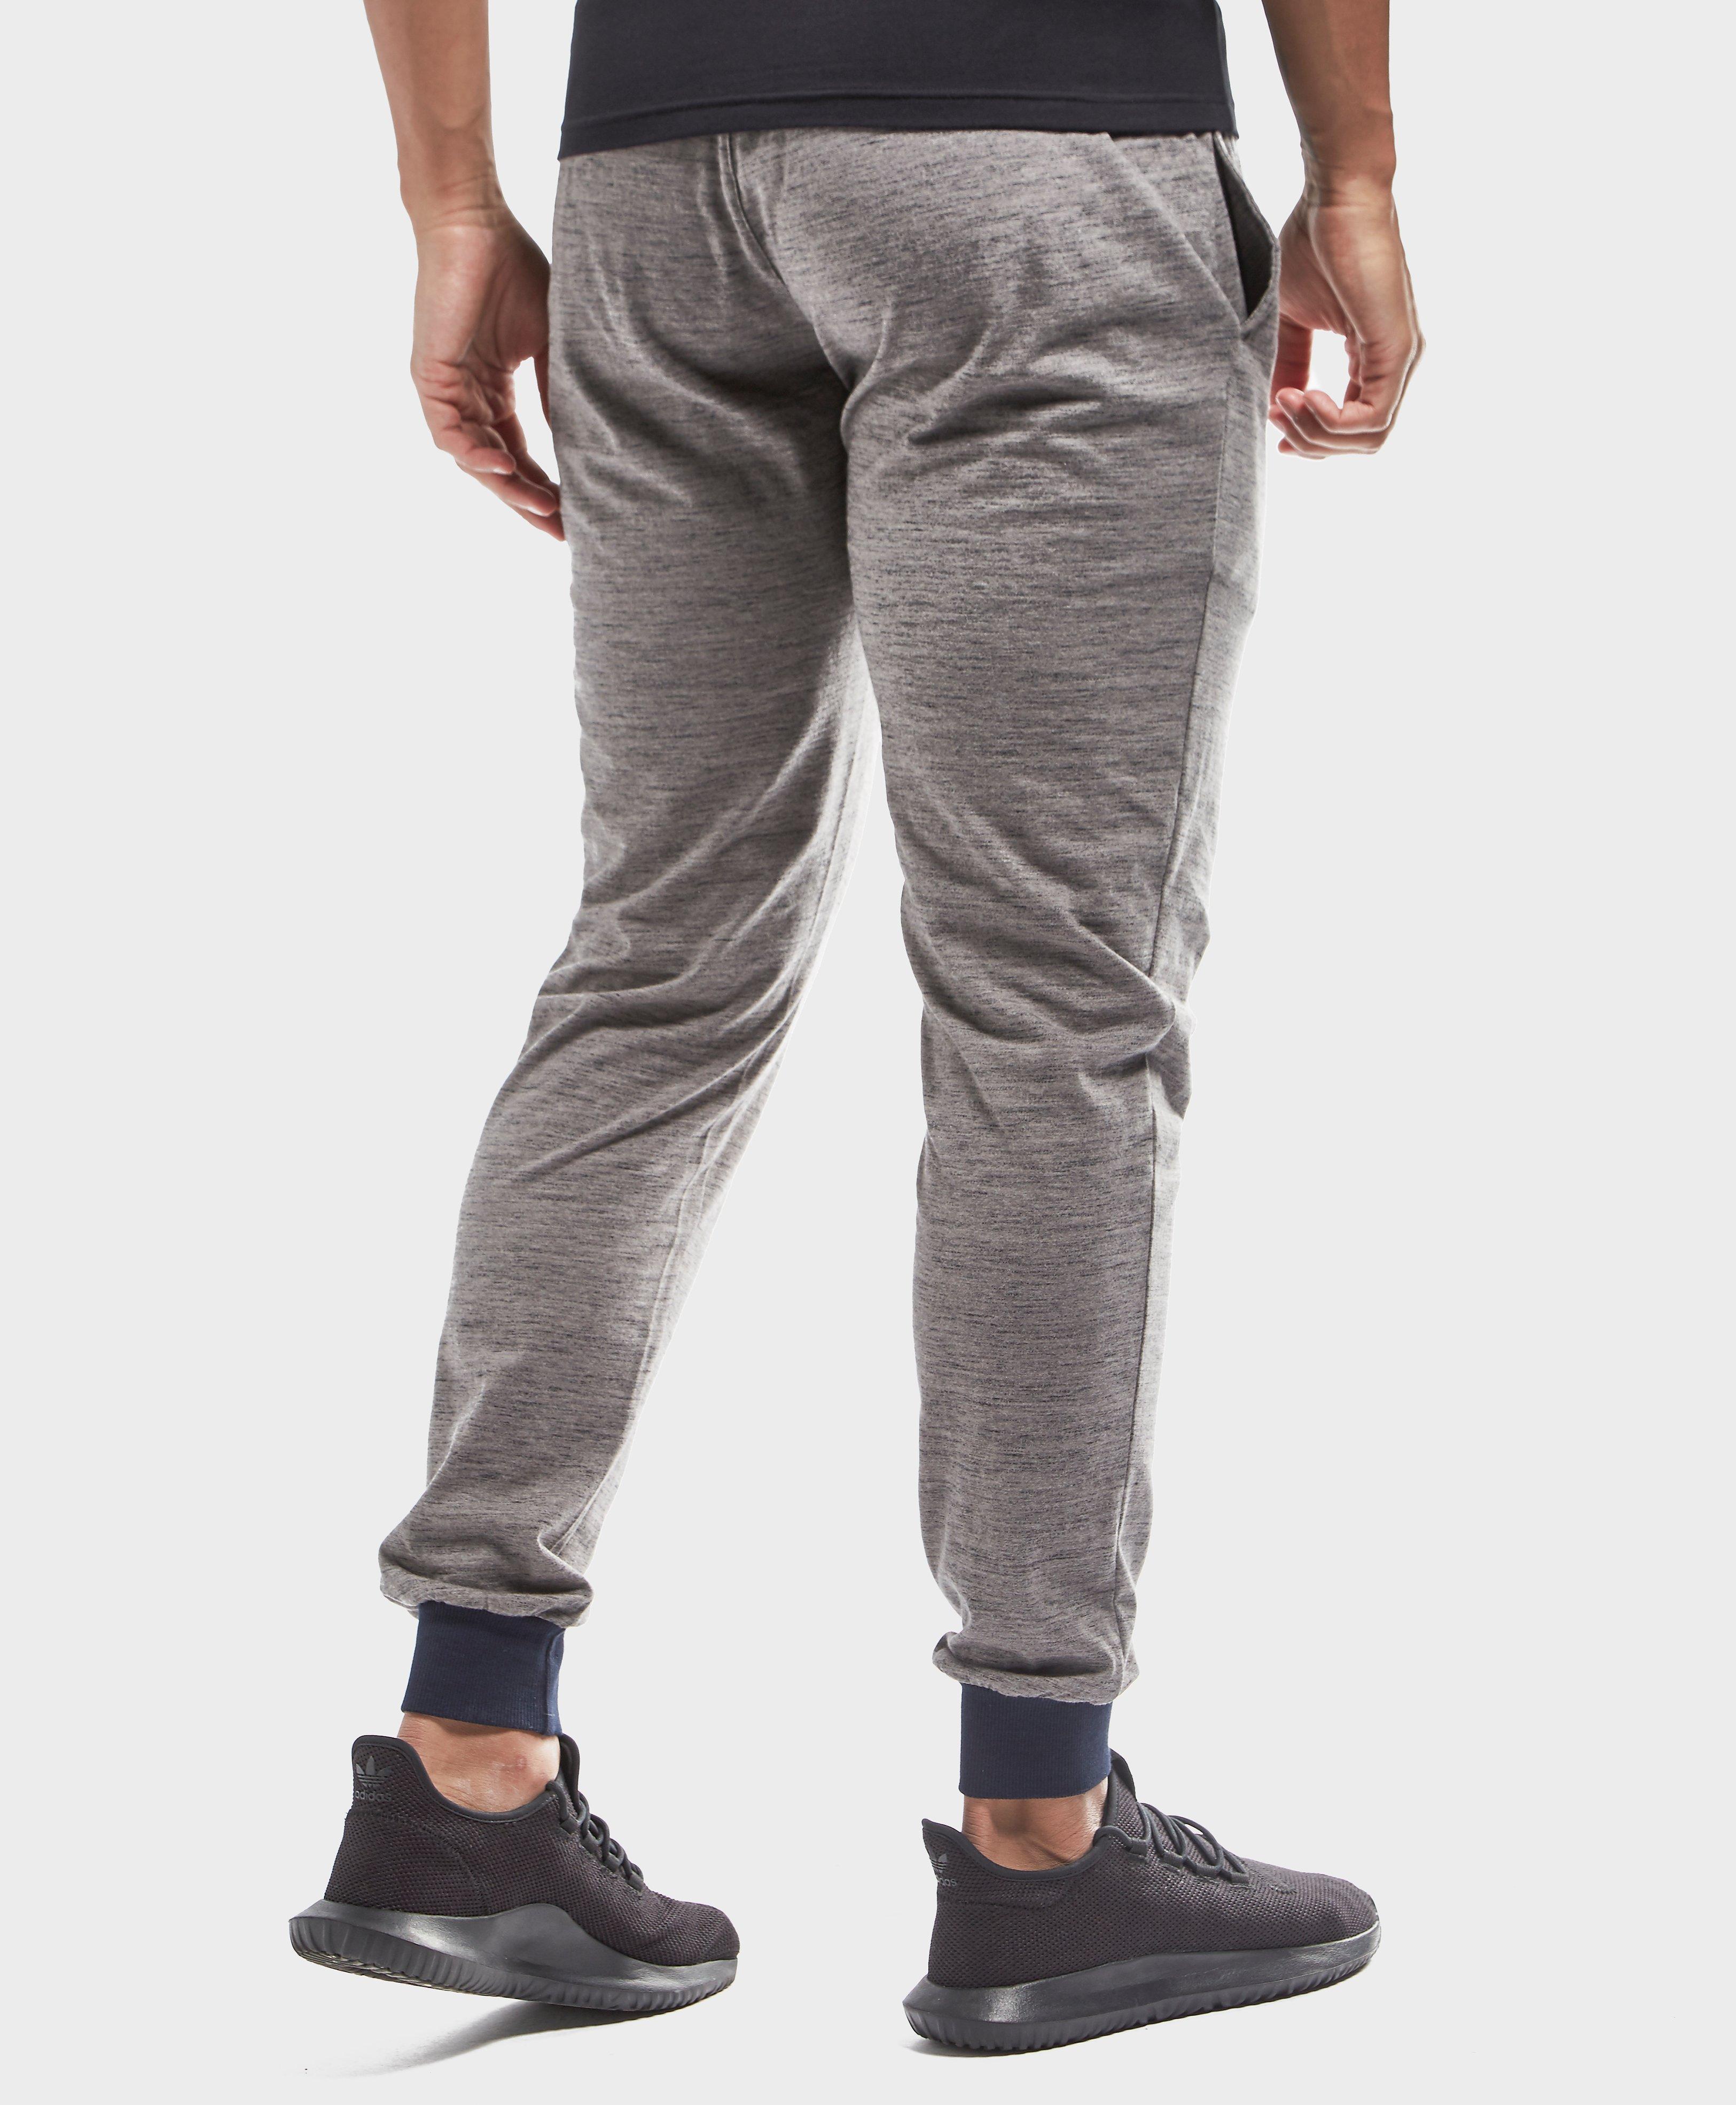 Lyst - Emporio Armani Slub Track Pants in Gray for Men